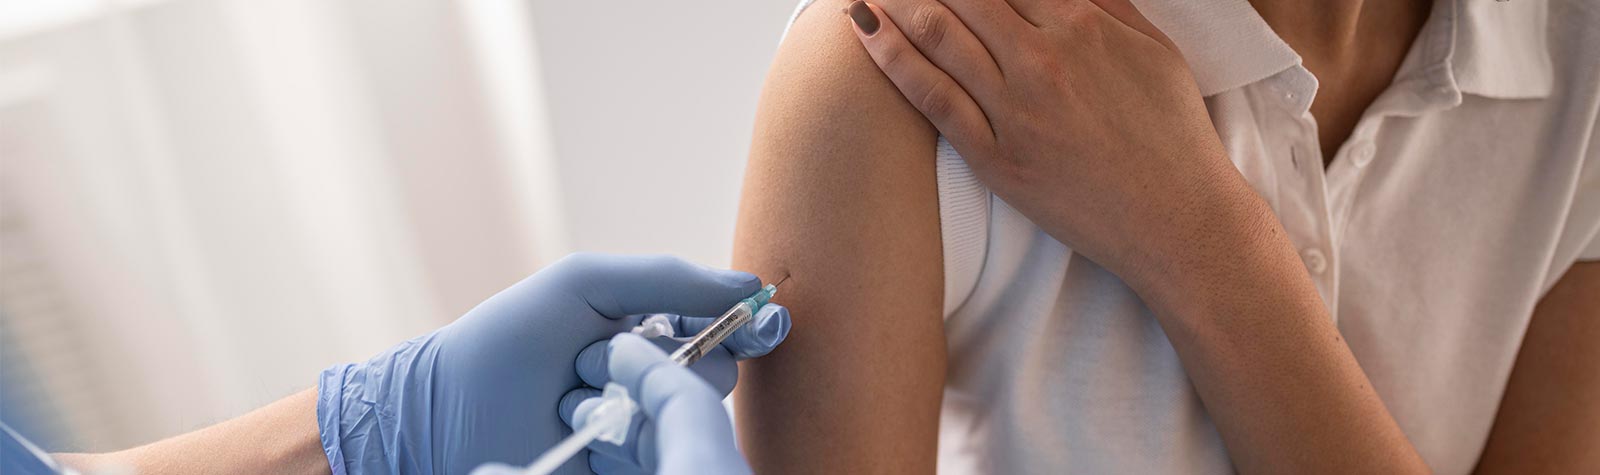 Mass Vaccinations Begin in Ohio